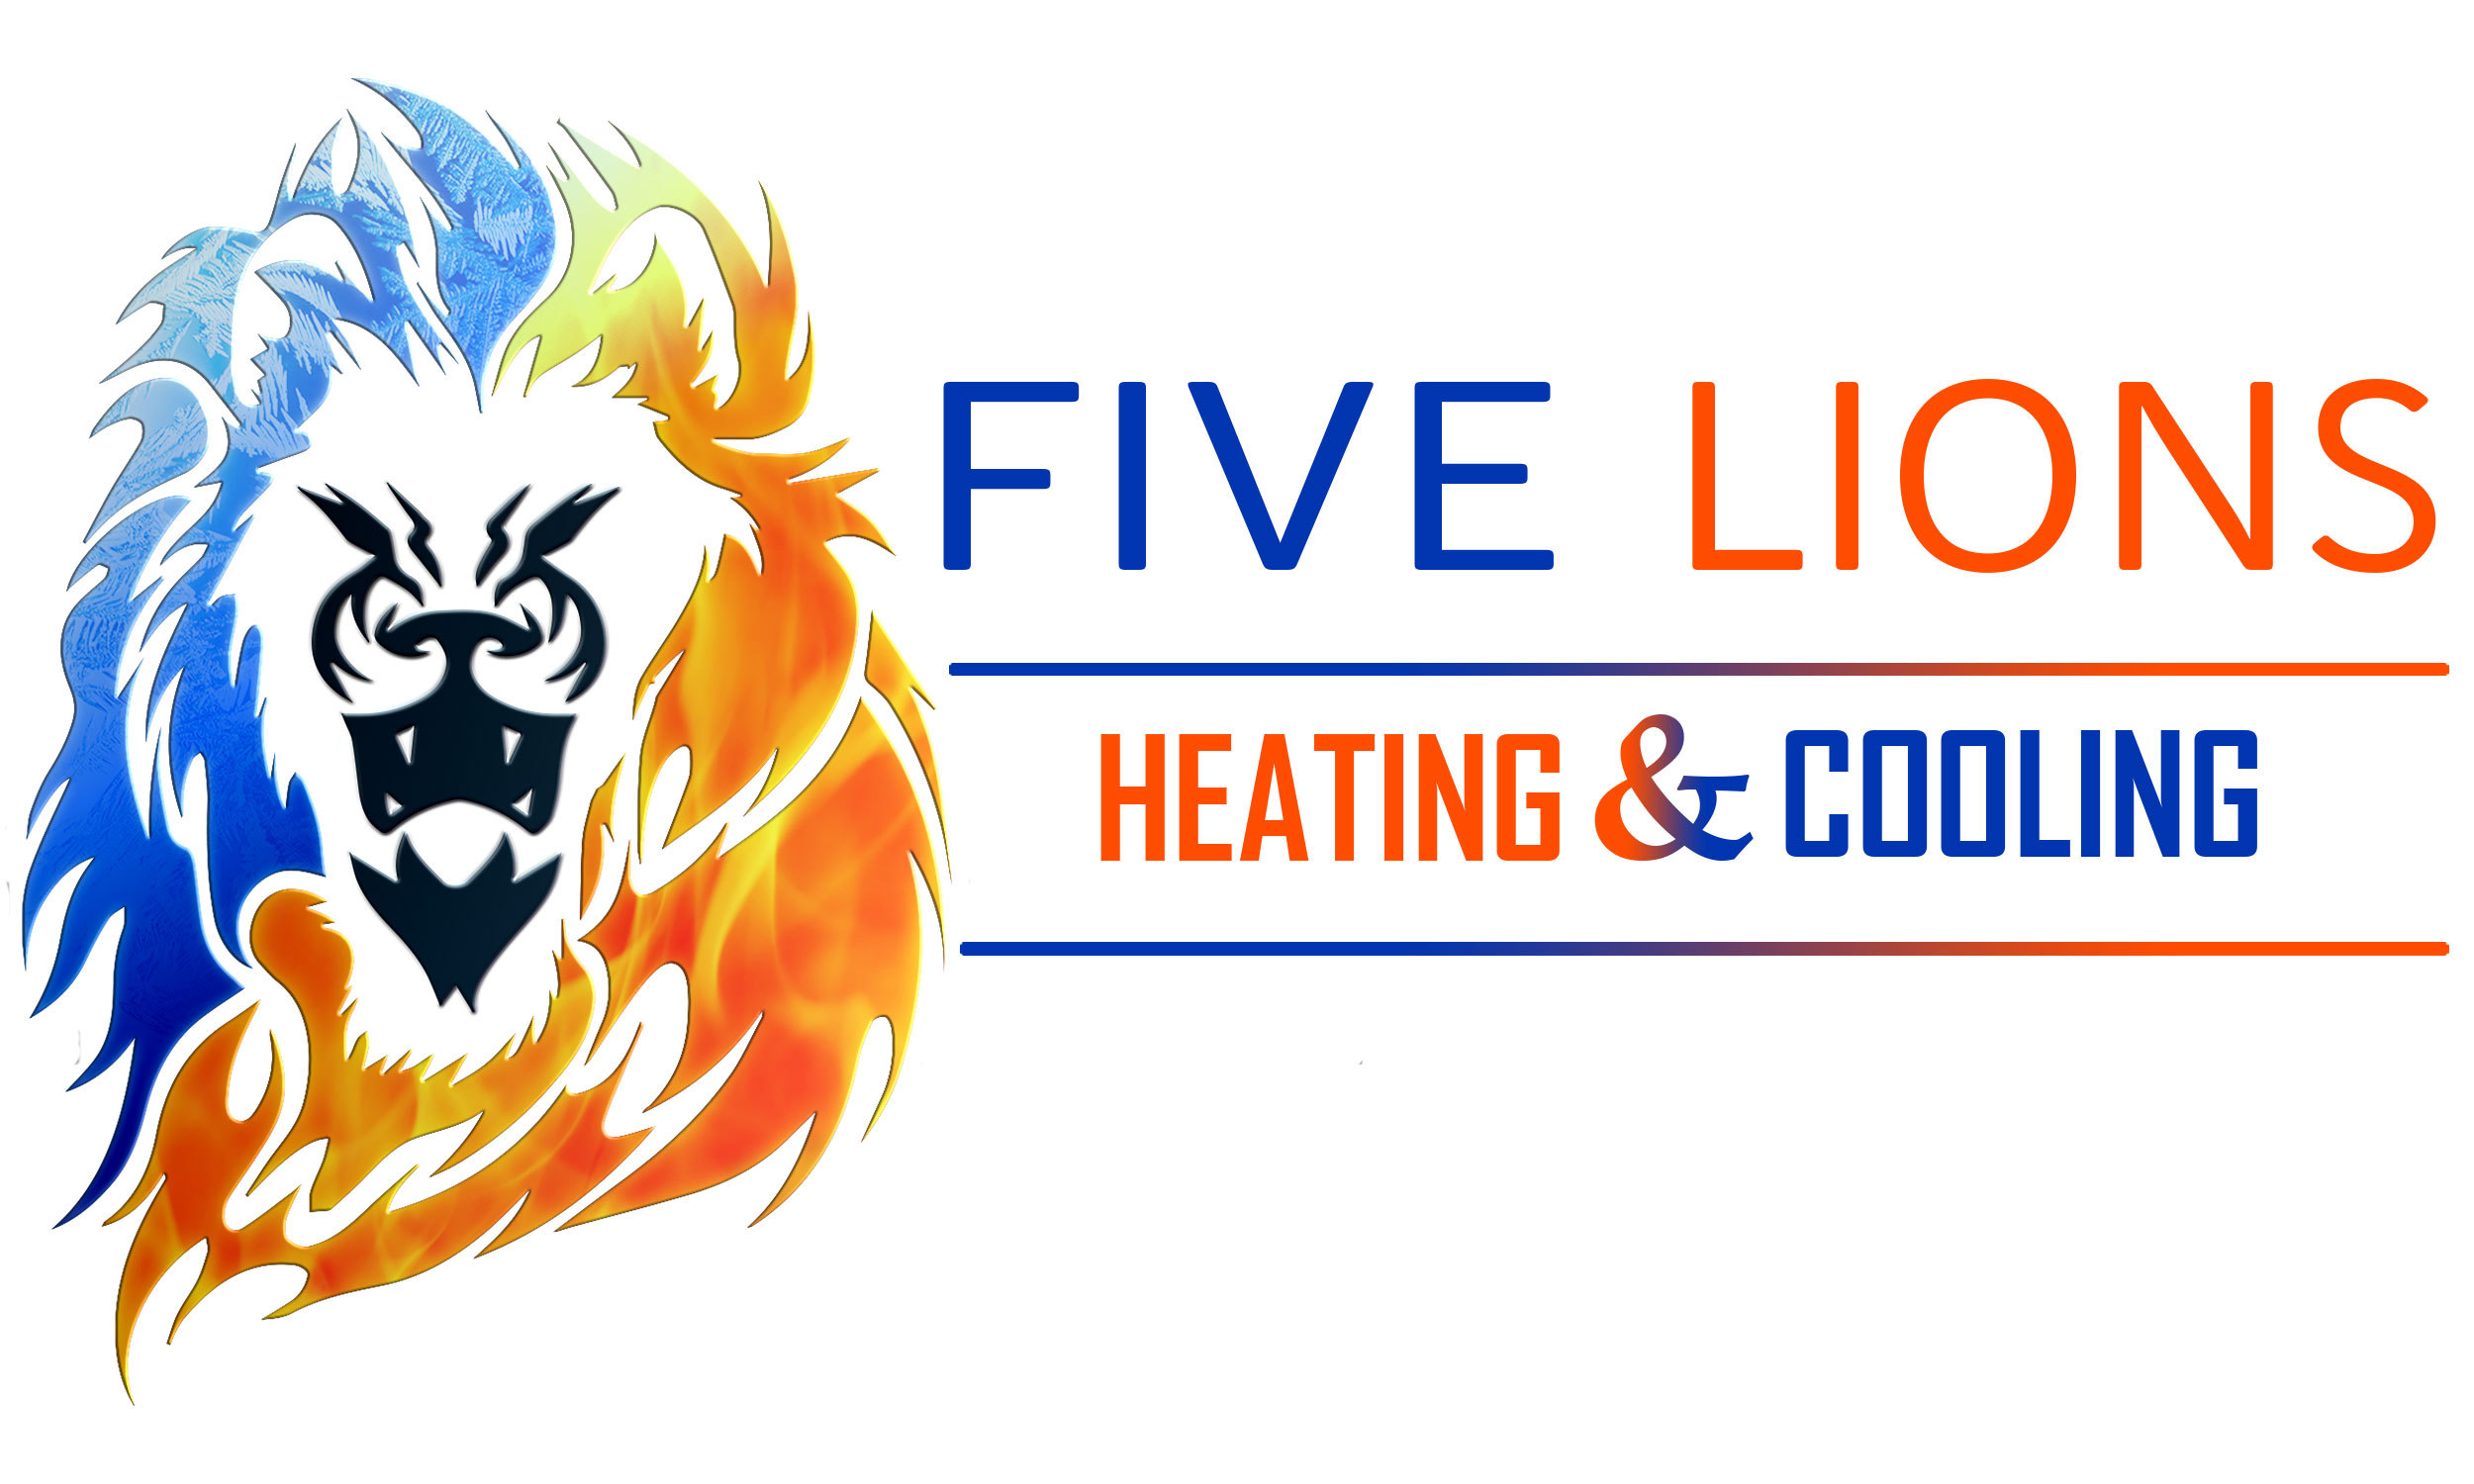 Five Lions Heating & Cooling Inc.'s logo